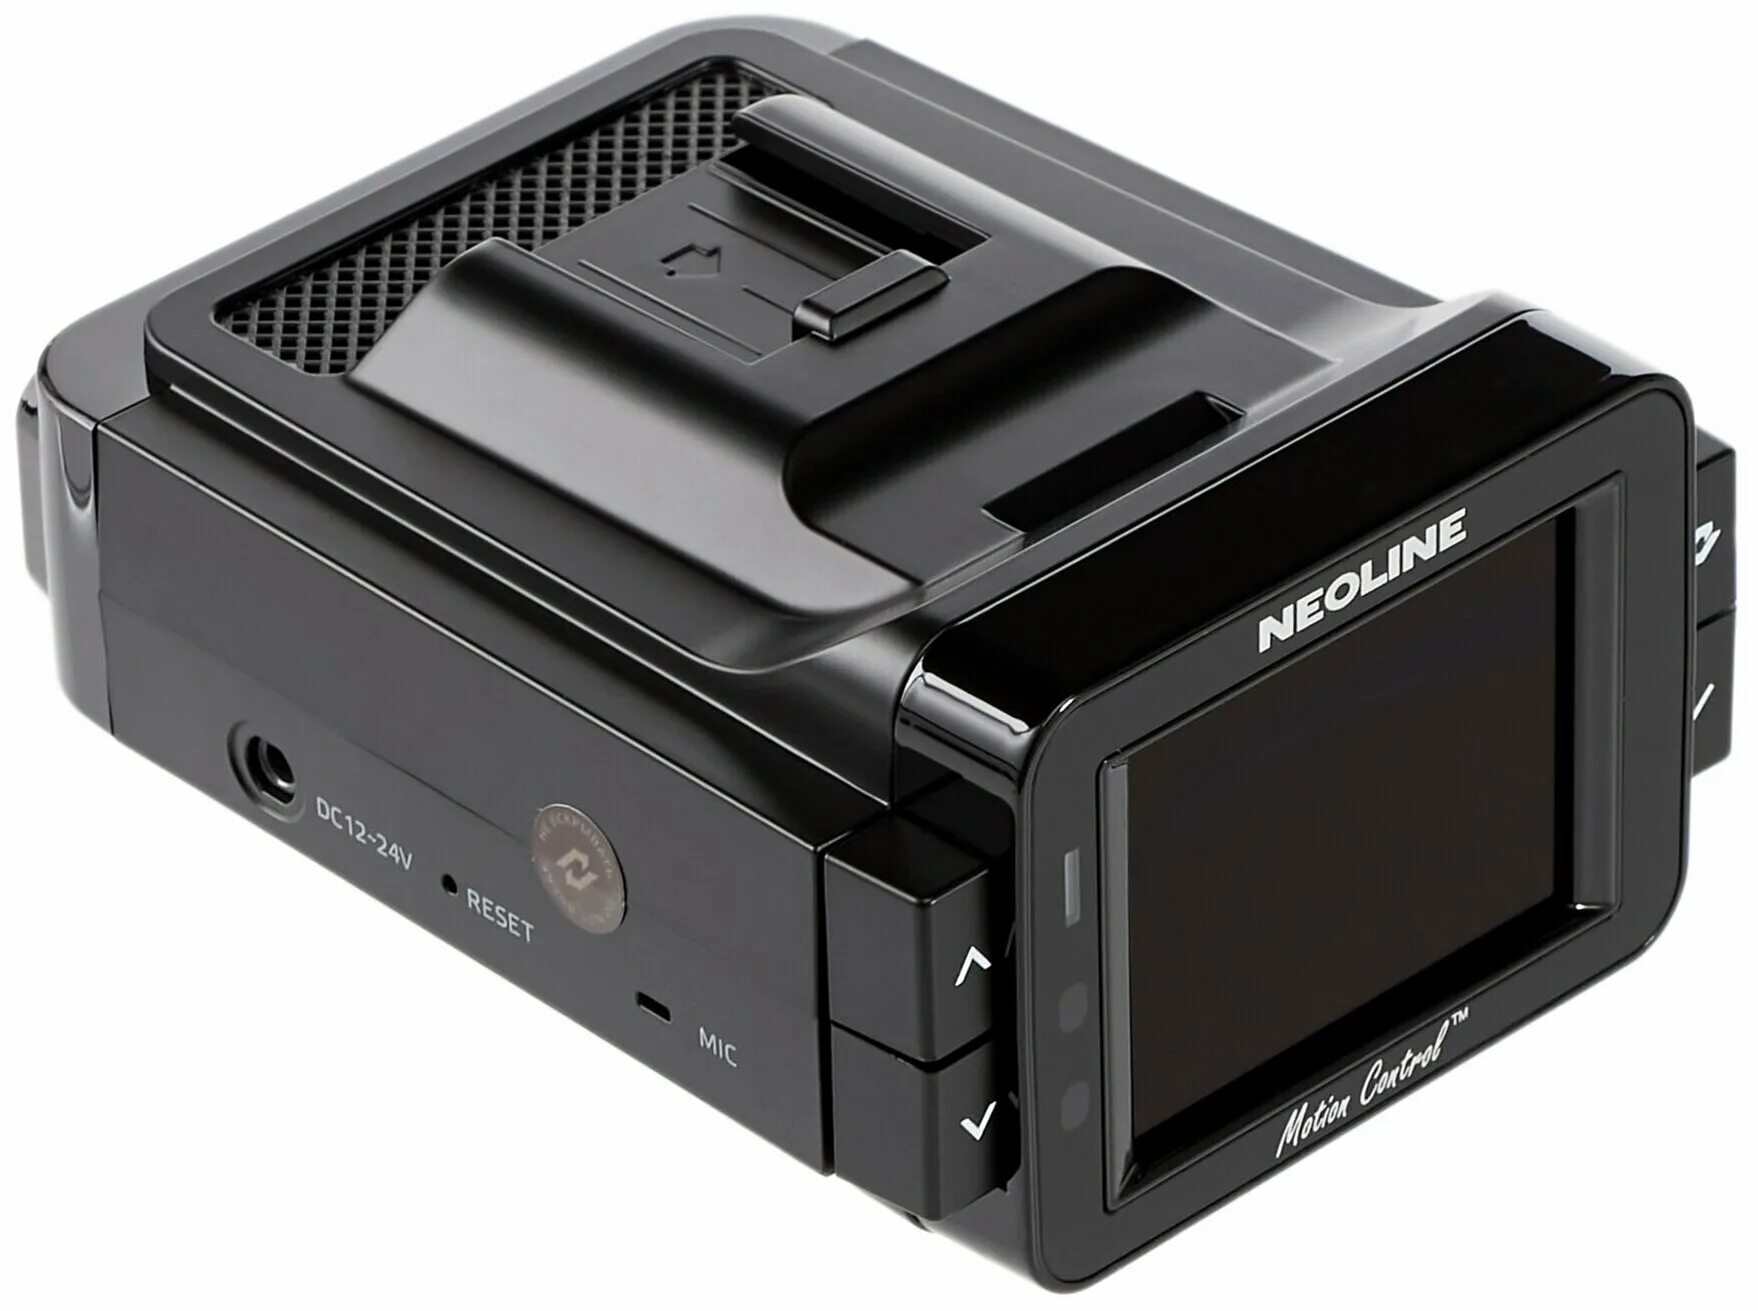 Neoline x cop 9100c. Видеорегистратор Neoline x-cop 9100s. Neoline 9100s характеристики. Neoline x-cop 9100s отзывы. Как настроить видеорегистратор x-cop 9100s.